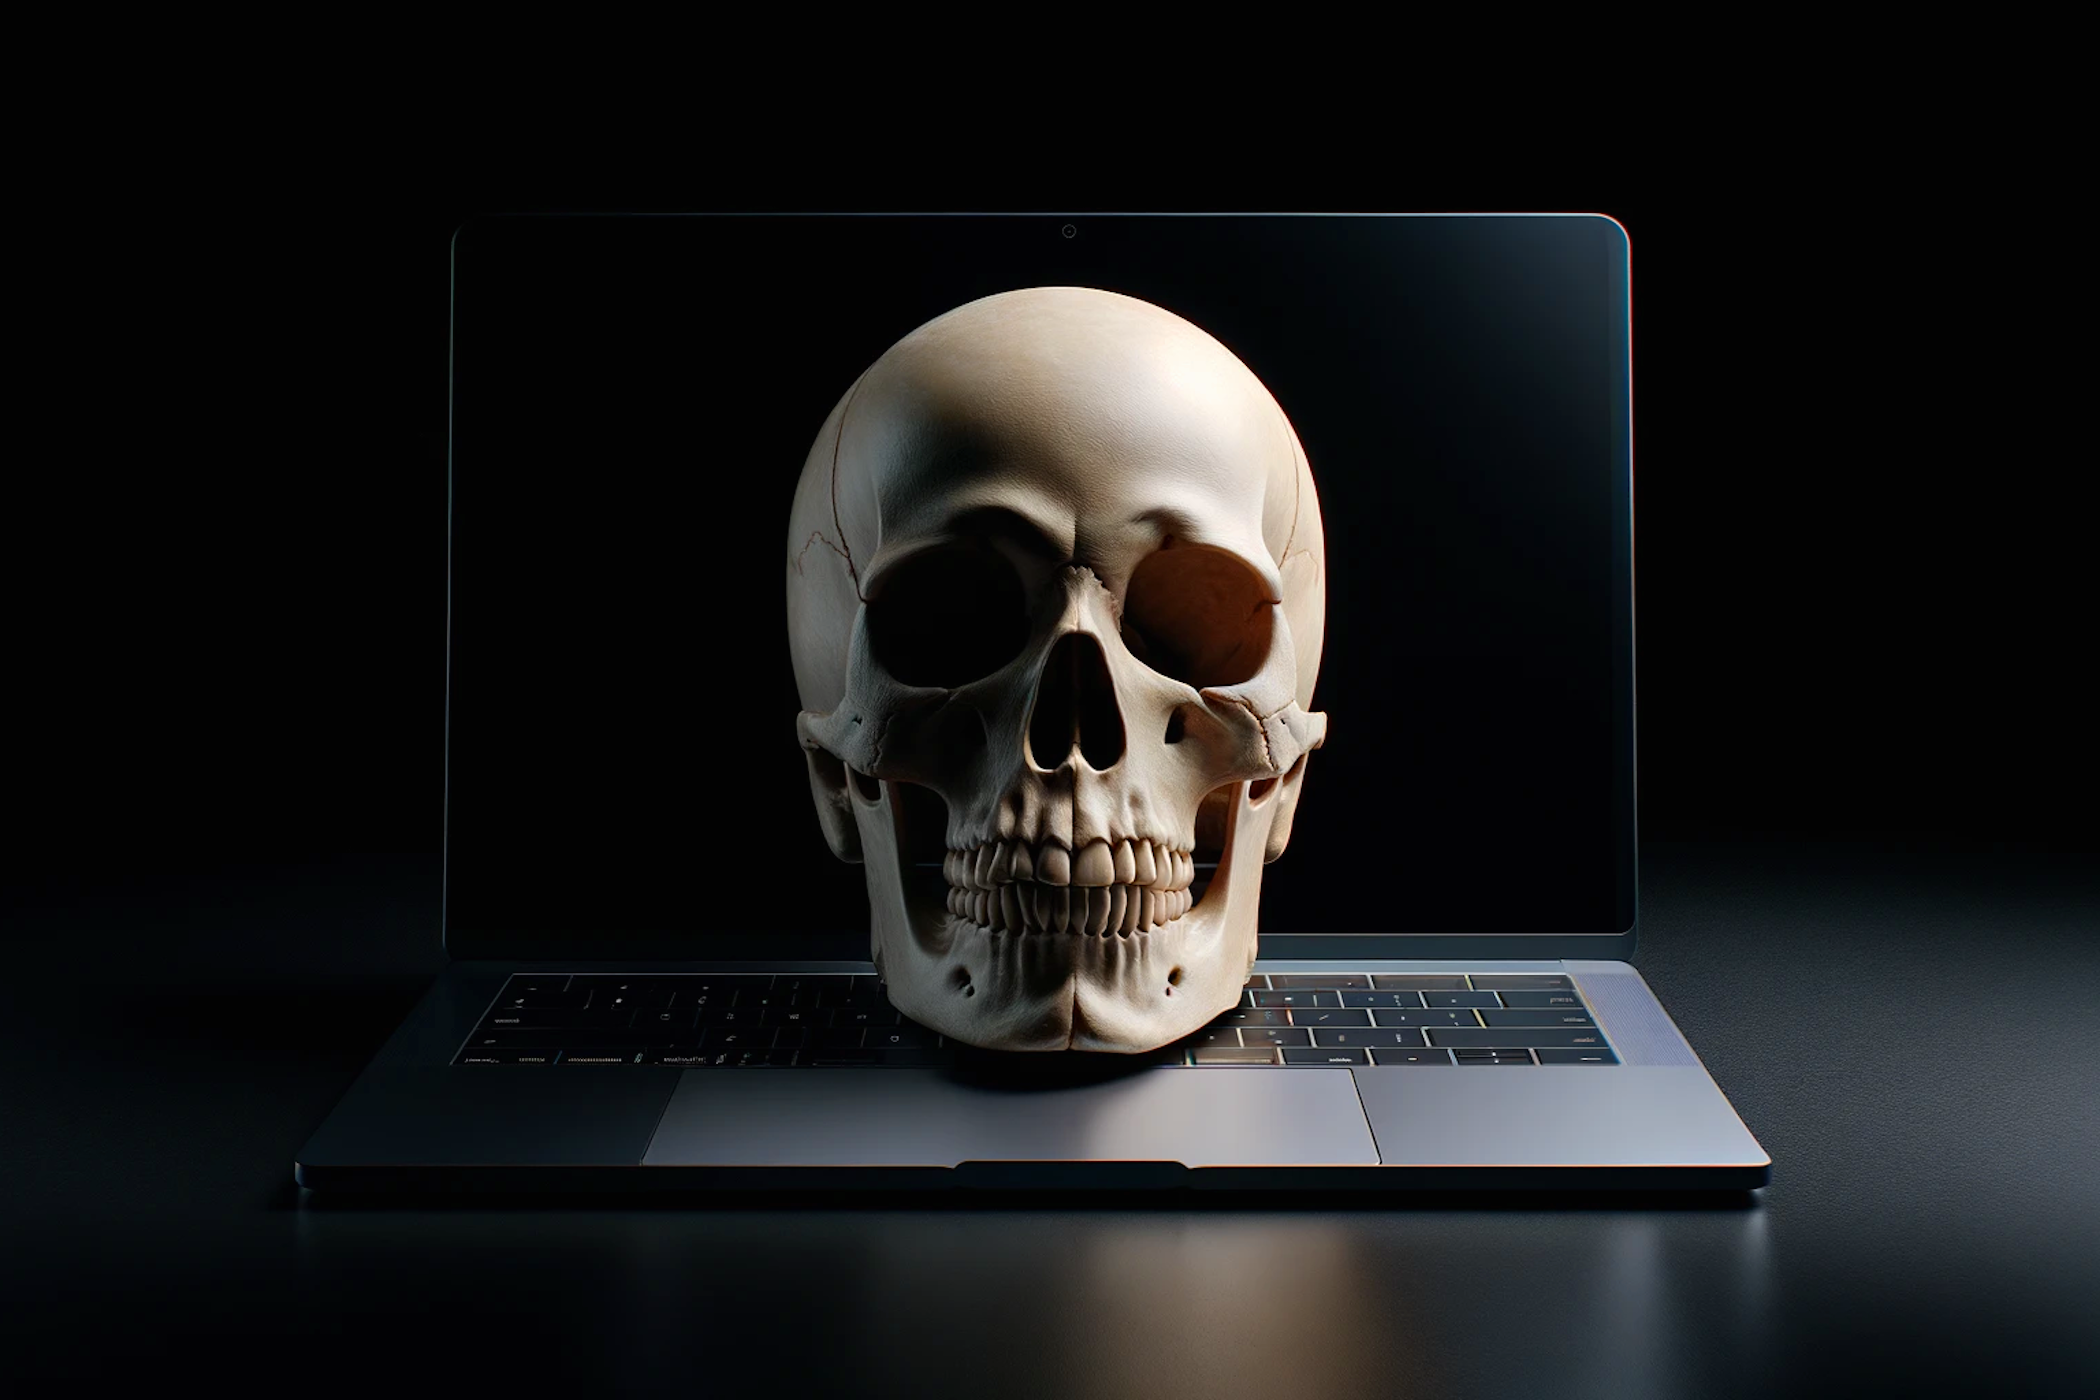 skull on laptop dead internet theory